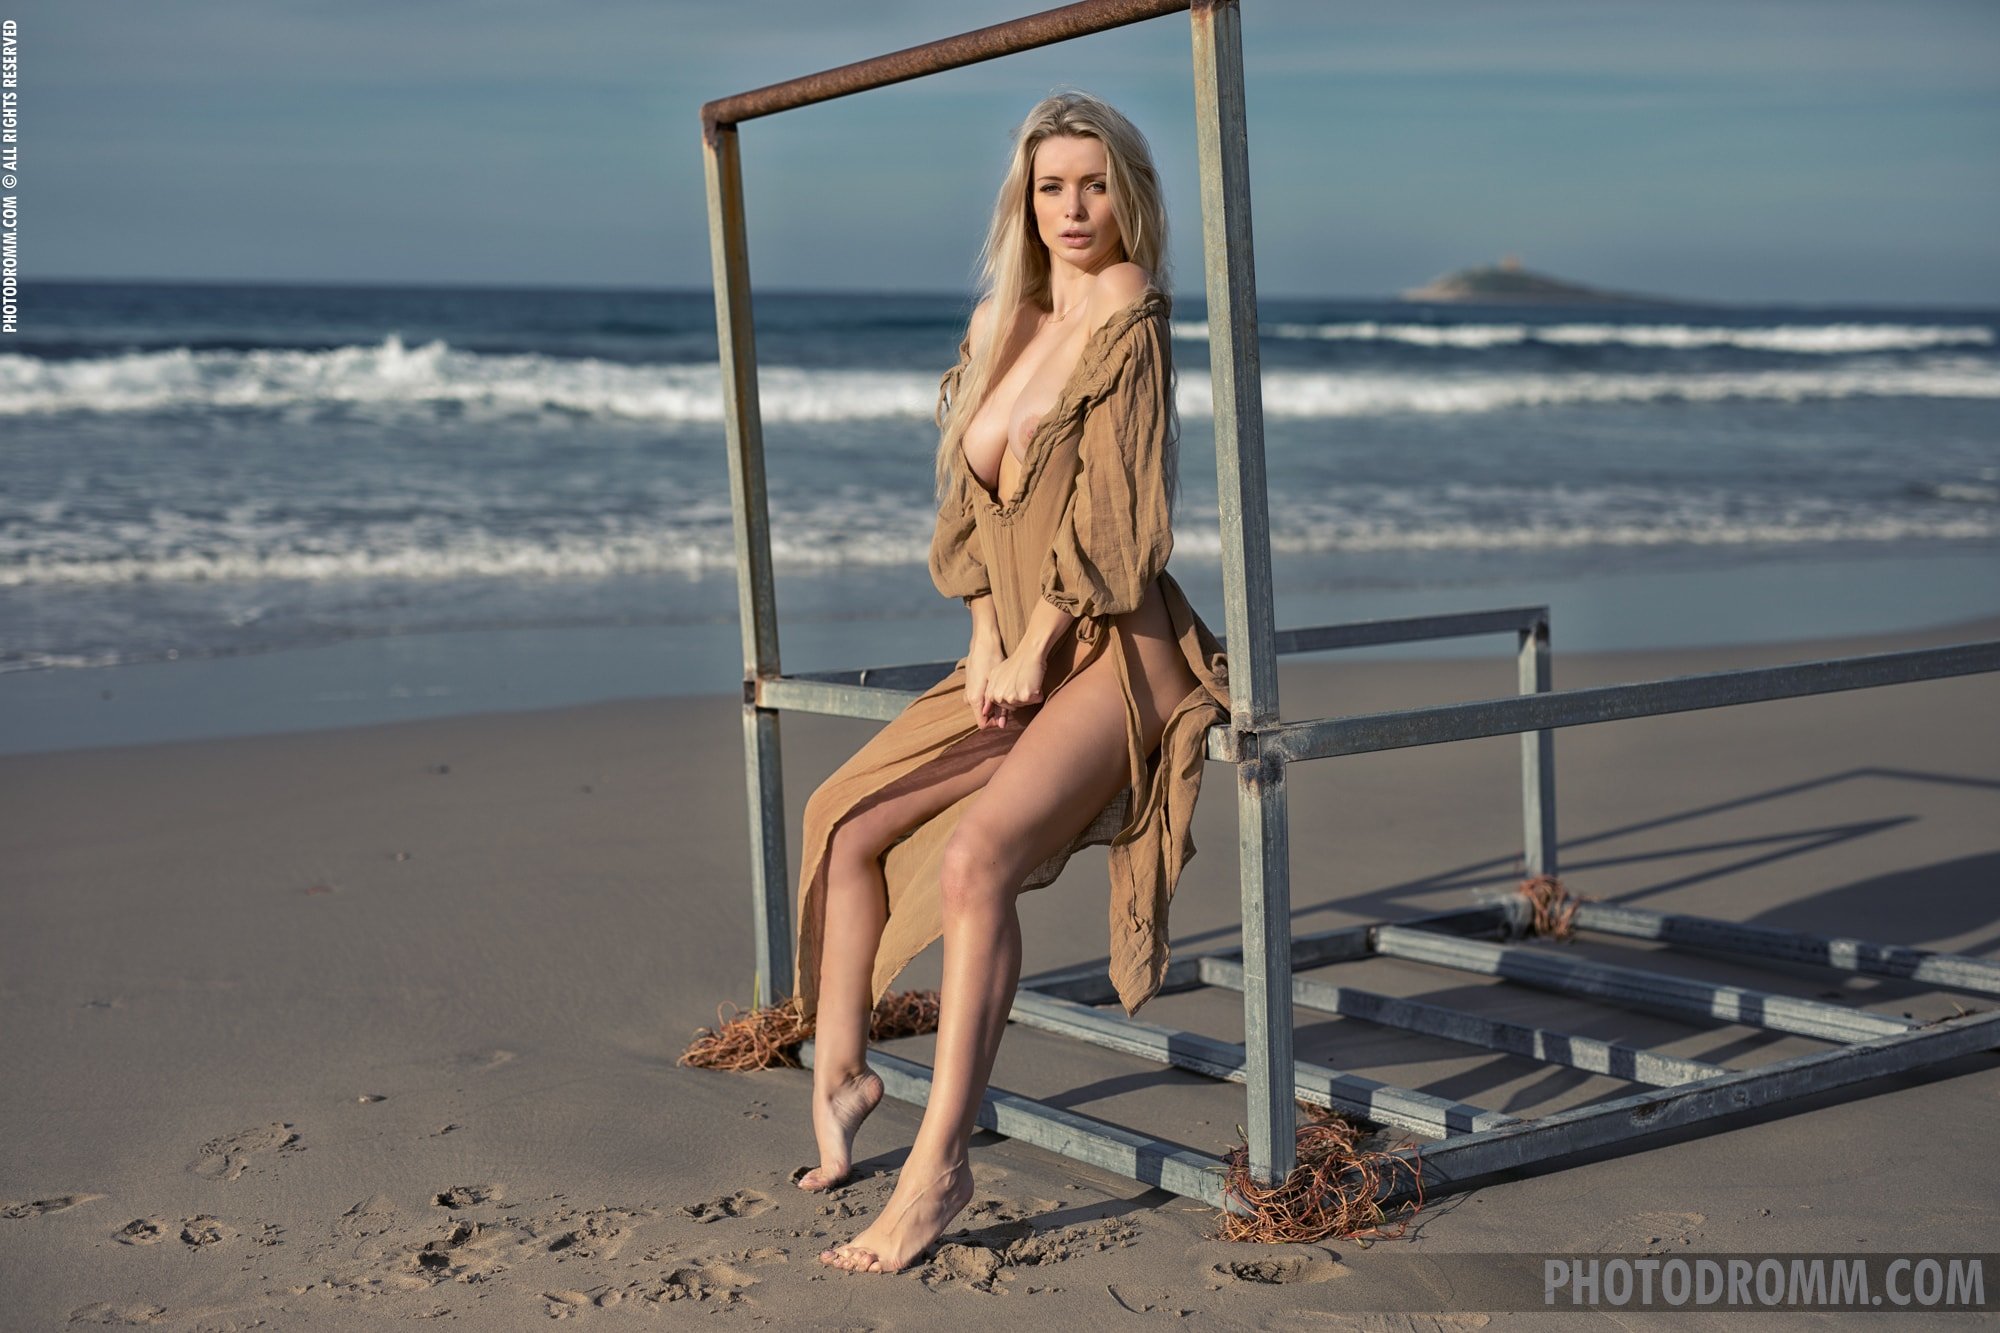 Stunning Katya exposes her big breasts on the beach